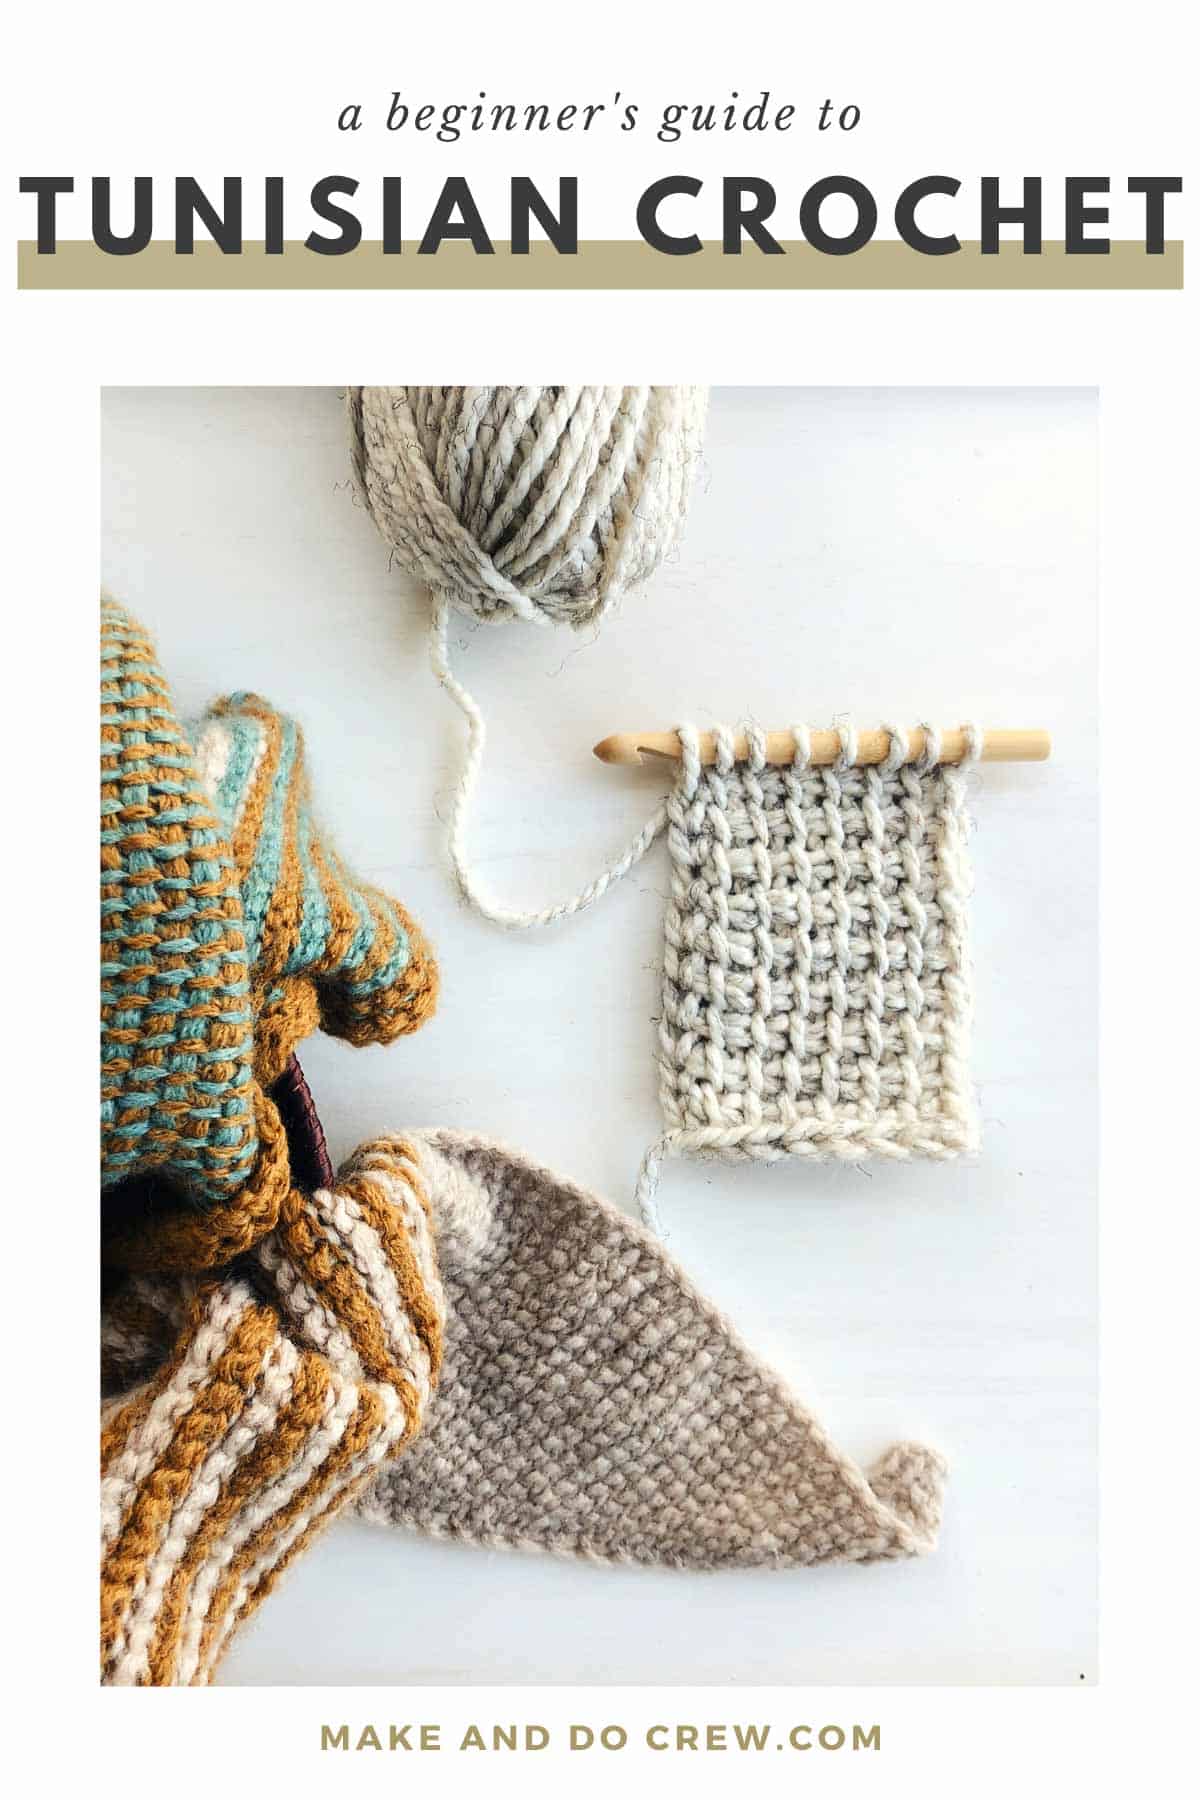 Tunisian crochet shawl next to a Tunisian crochet simple stitch swatch.